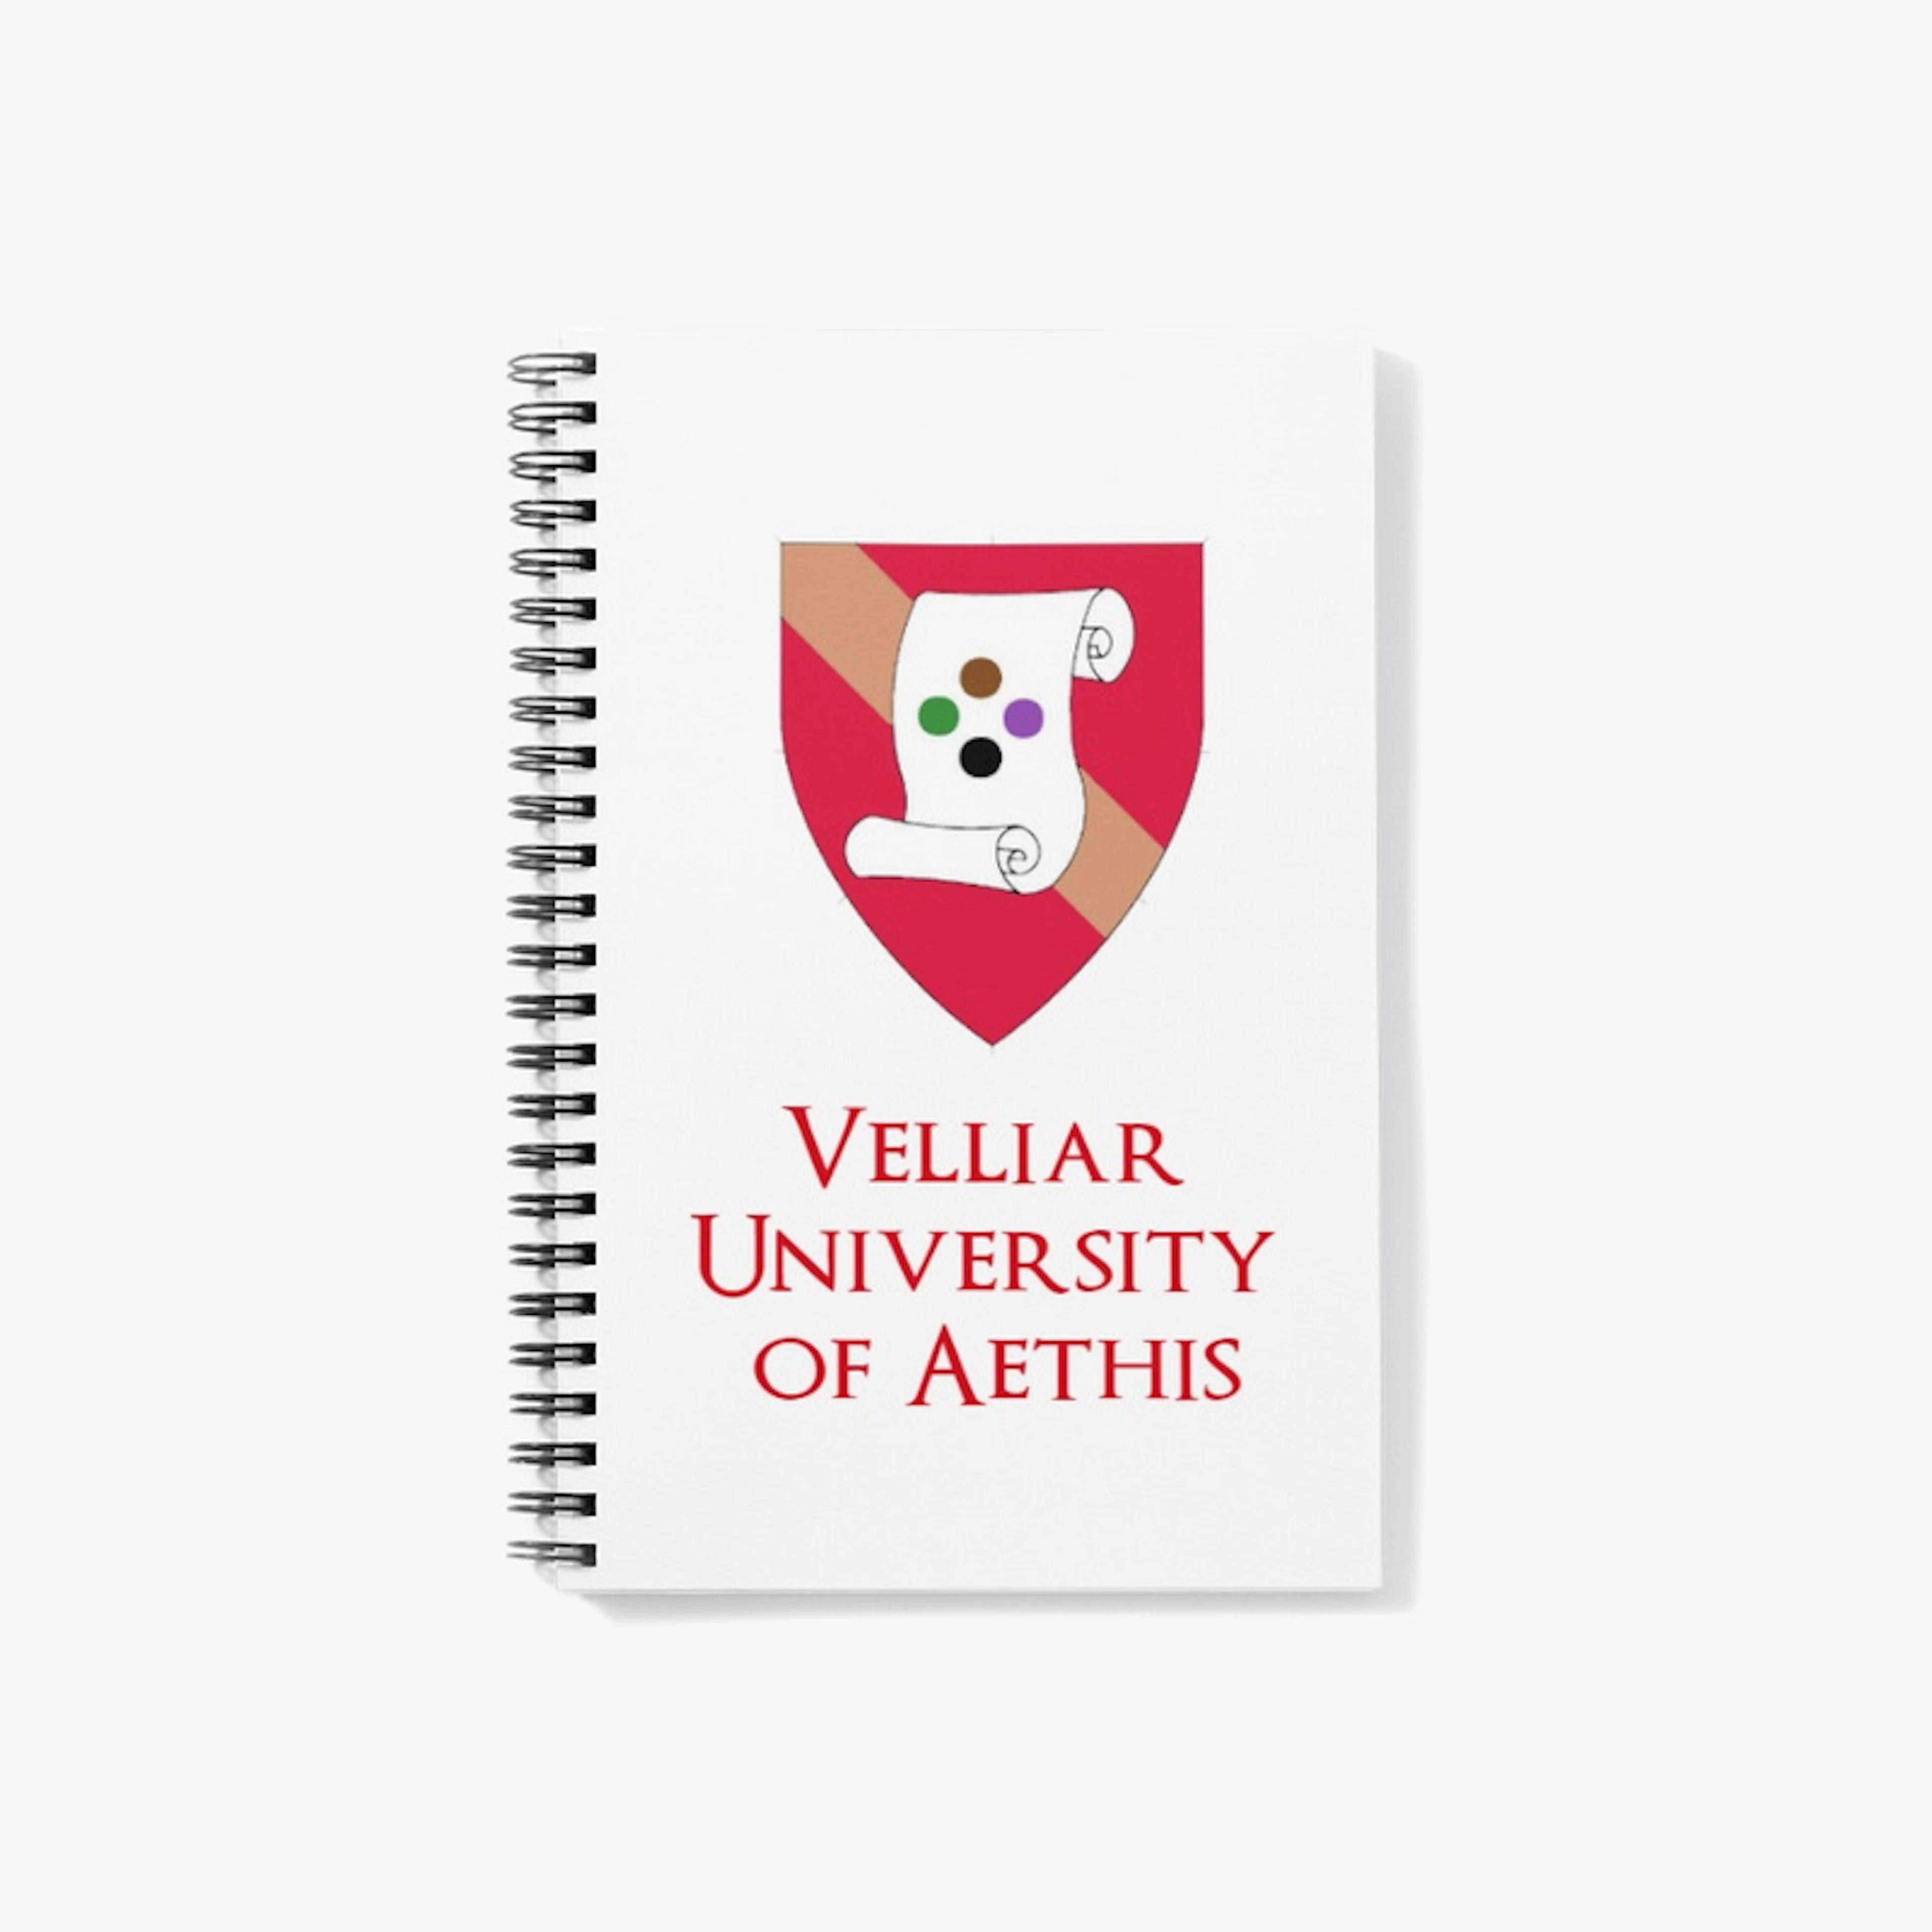 Velliar University of Aethis